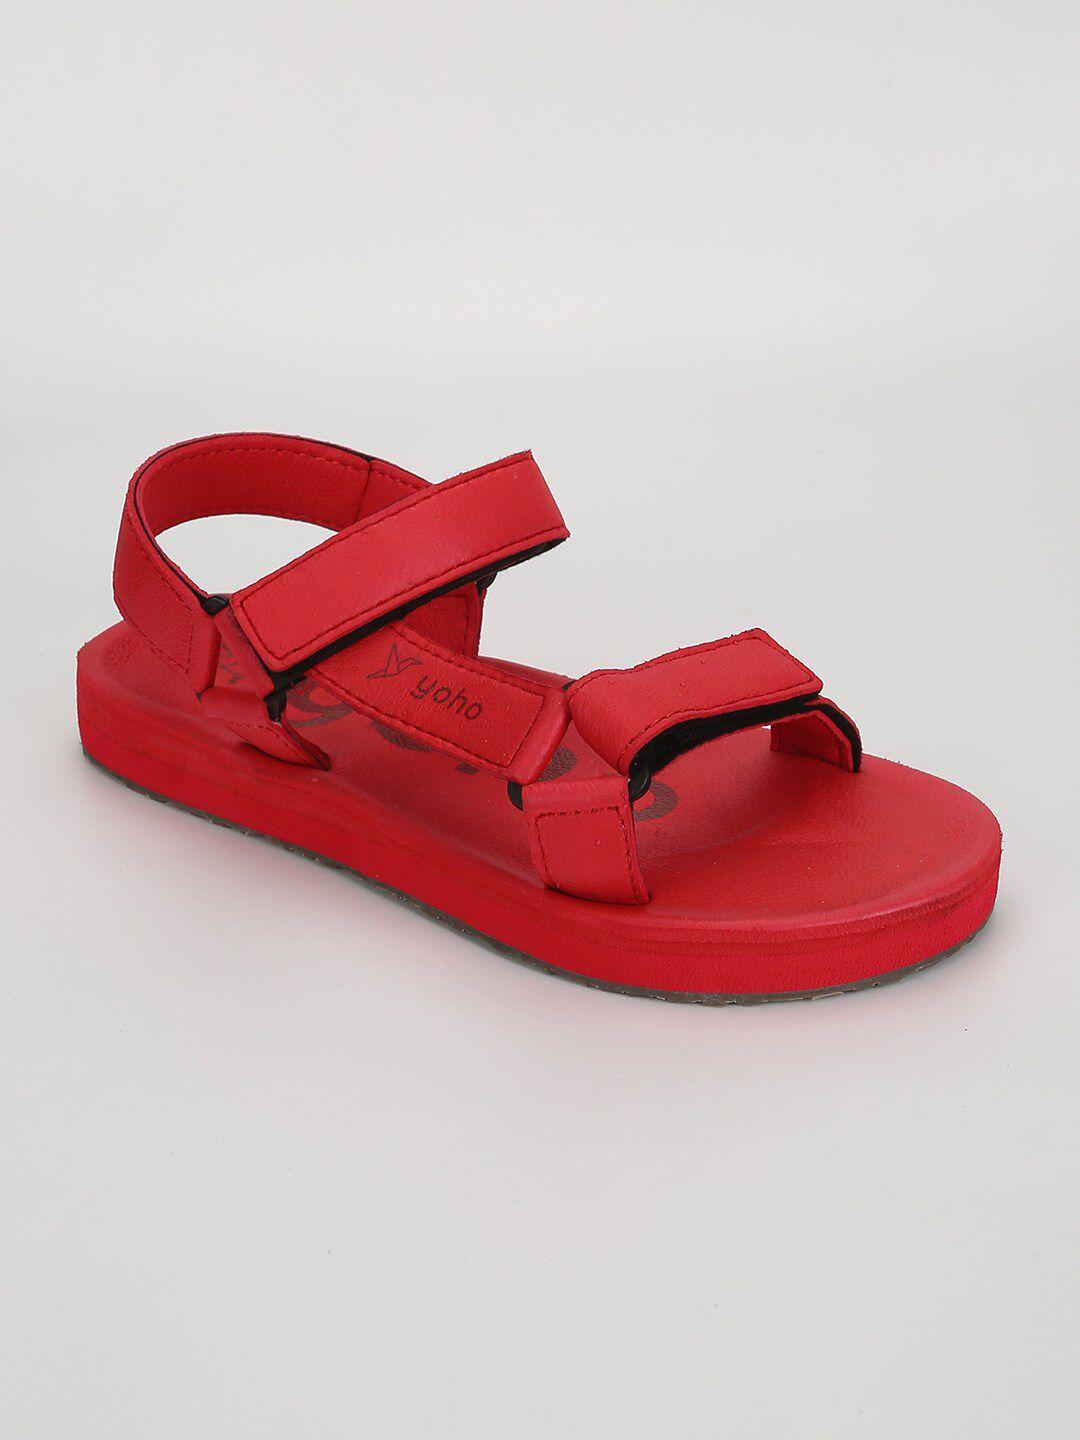 yoho-men-velcro-sports-sandals